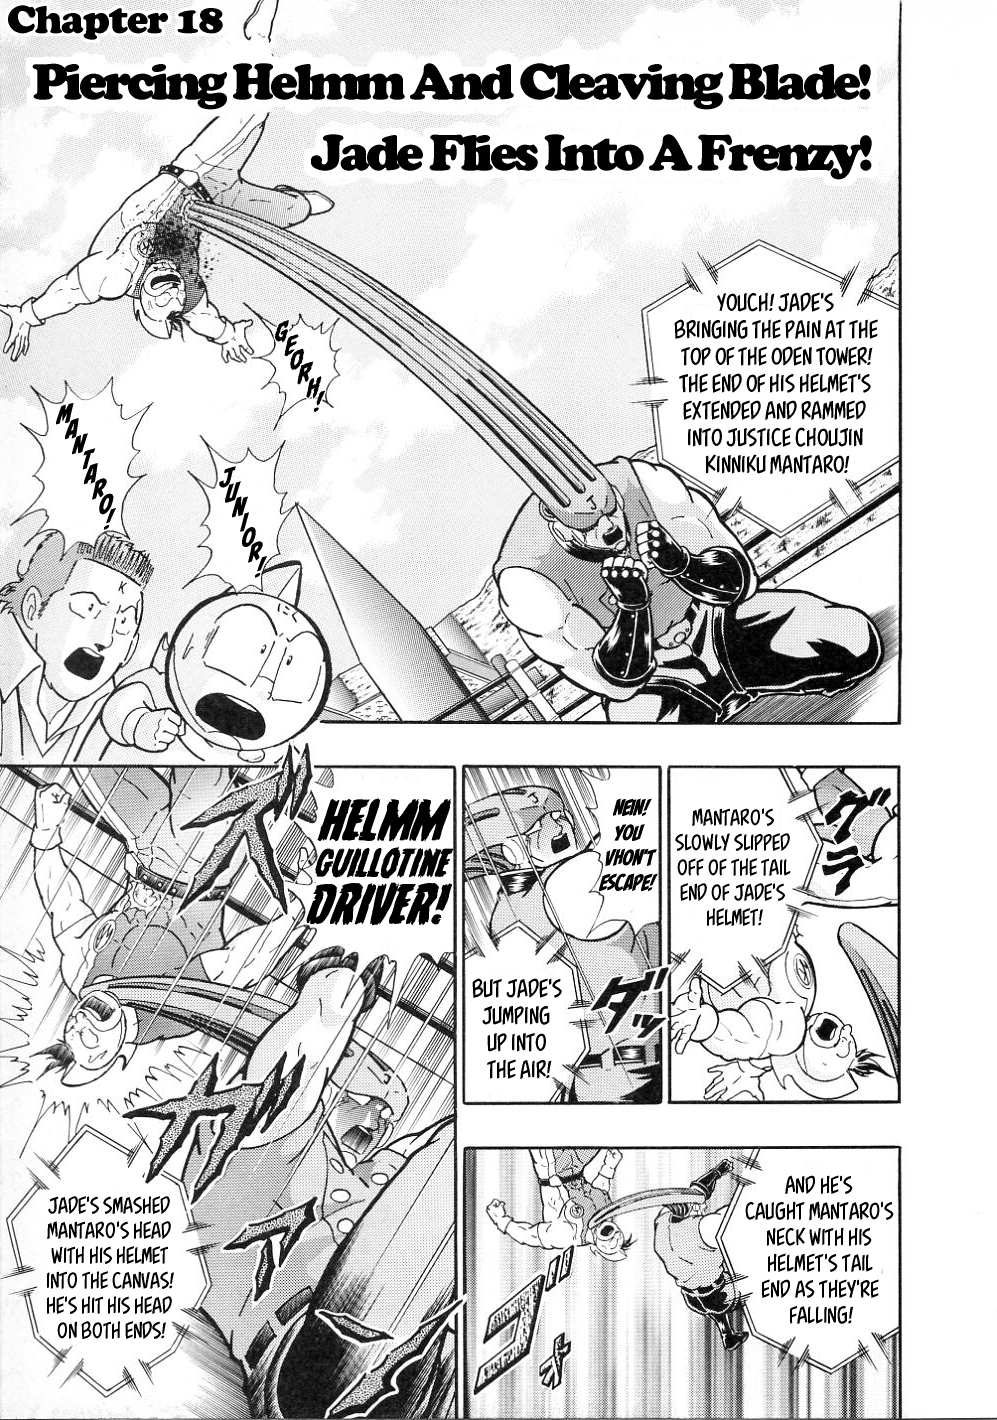 Kinnikuman II Sei: All Choujin Daishingeki Vol. 2 Ch. 18 Piercing Helmm and Cleaving Blade! Jade Flies Into a Frenzy!